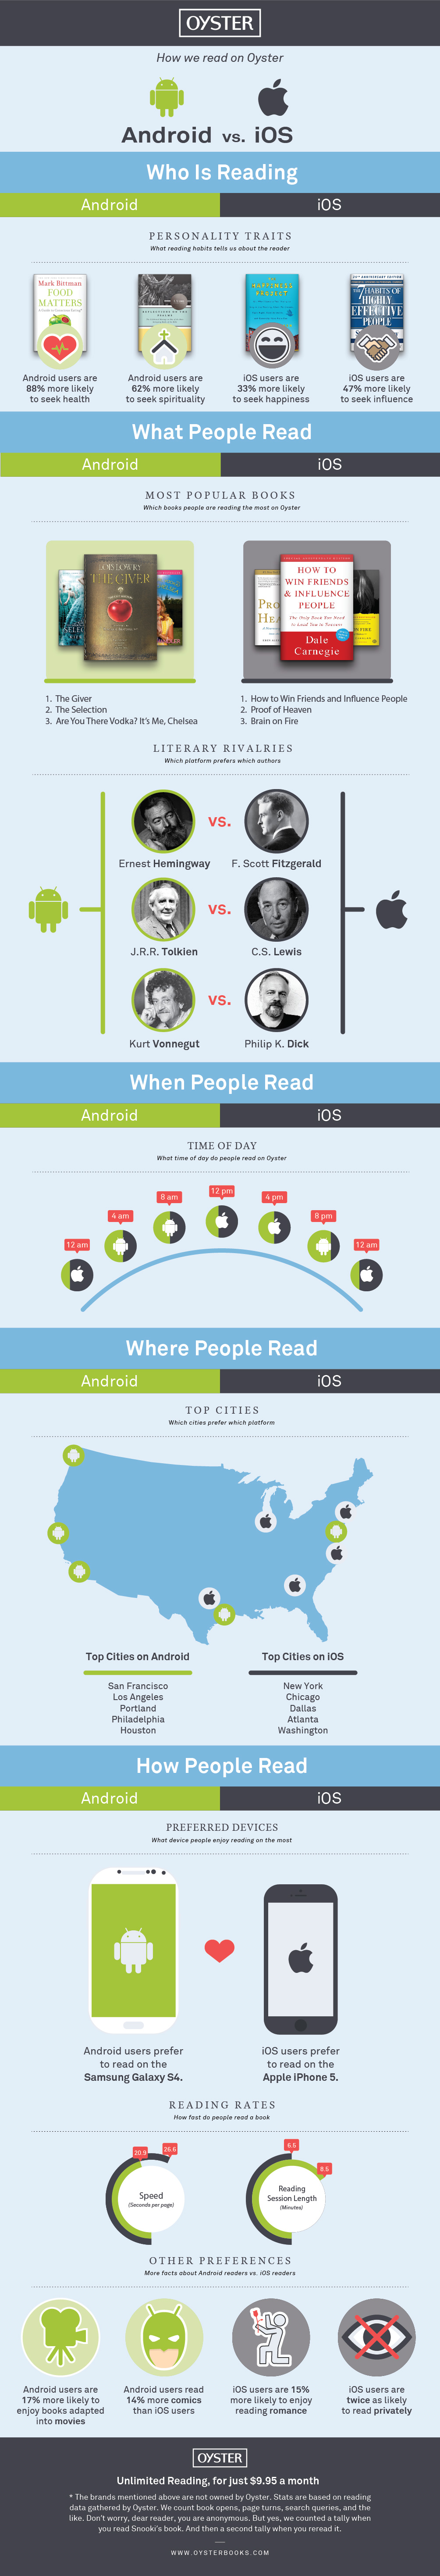 Кто что как читает? Android vs. iOS на Oyster